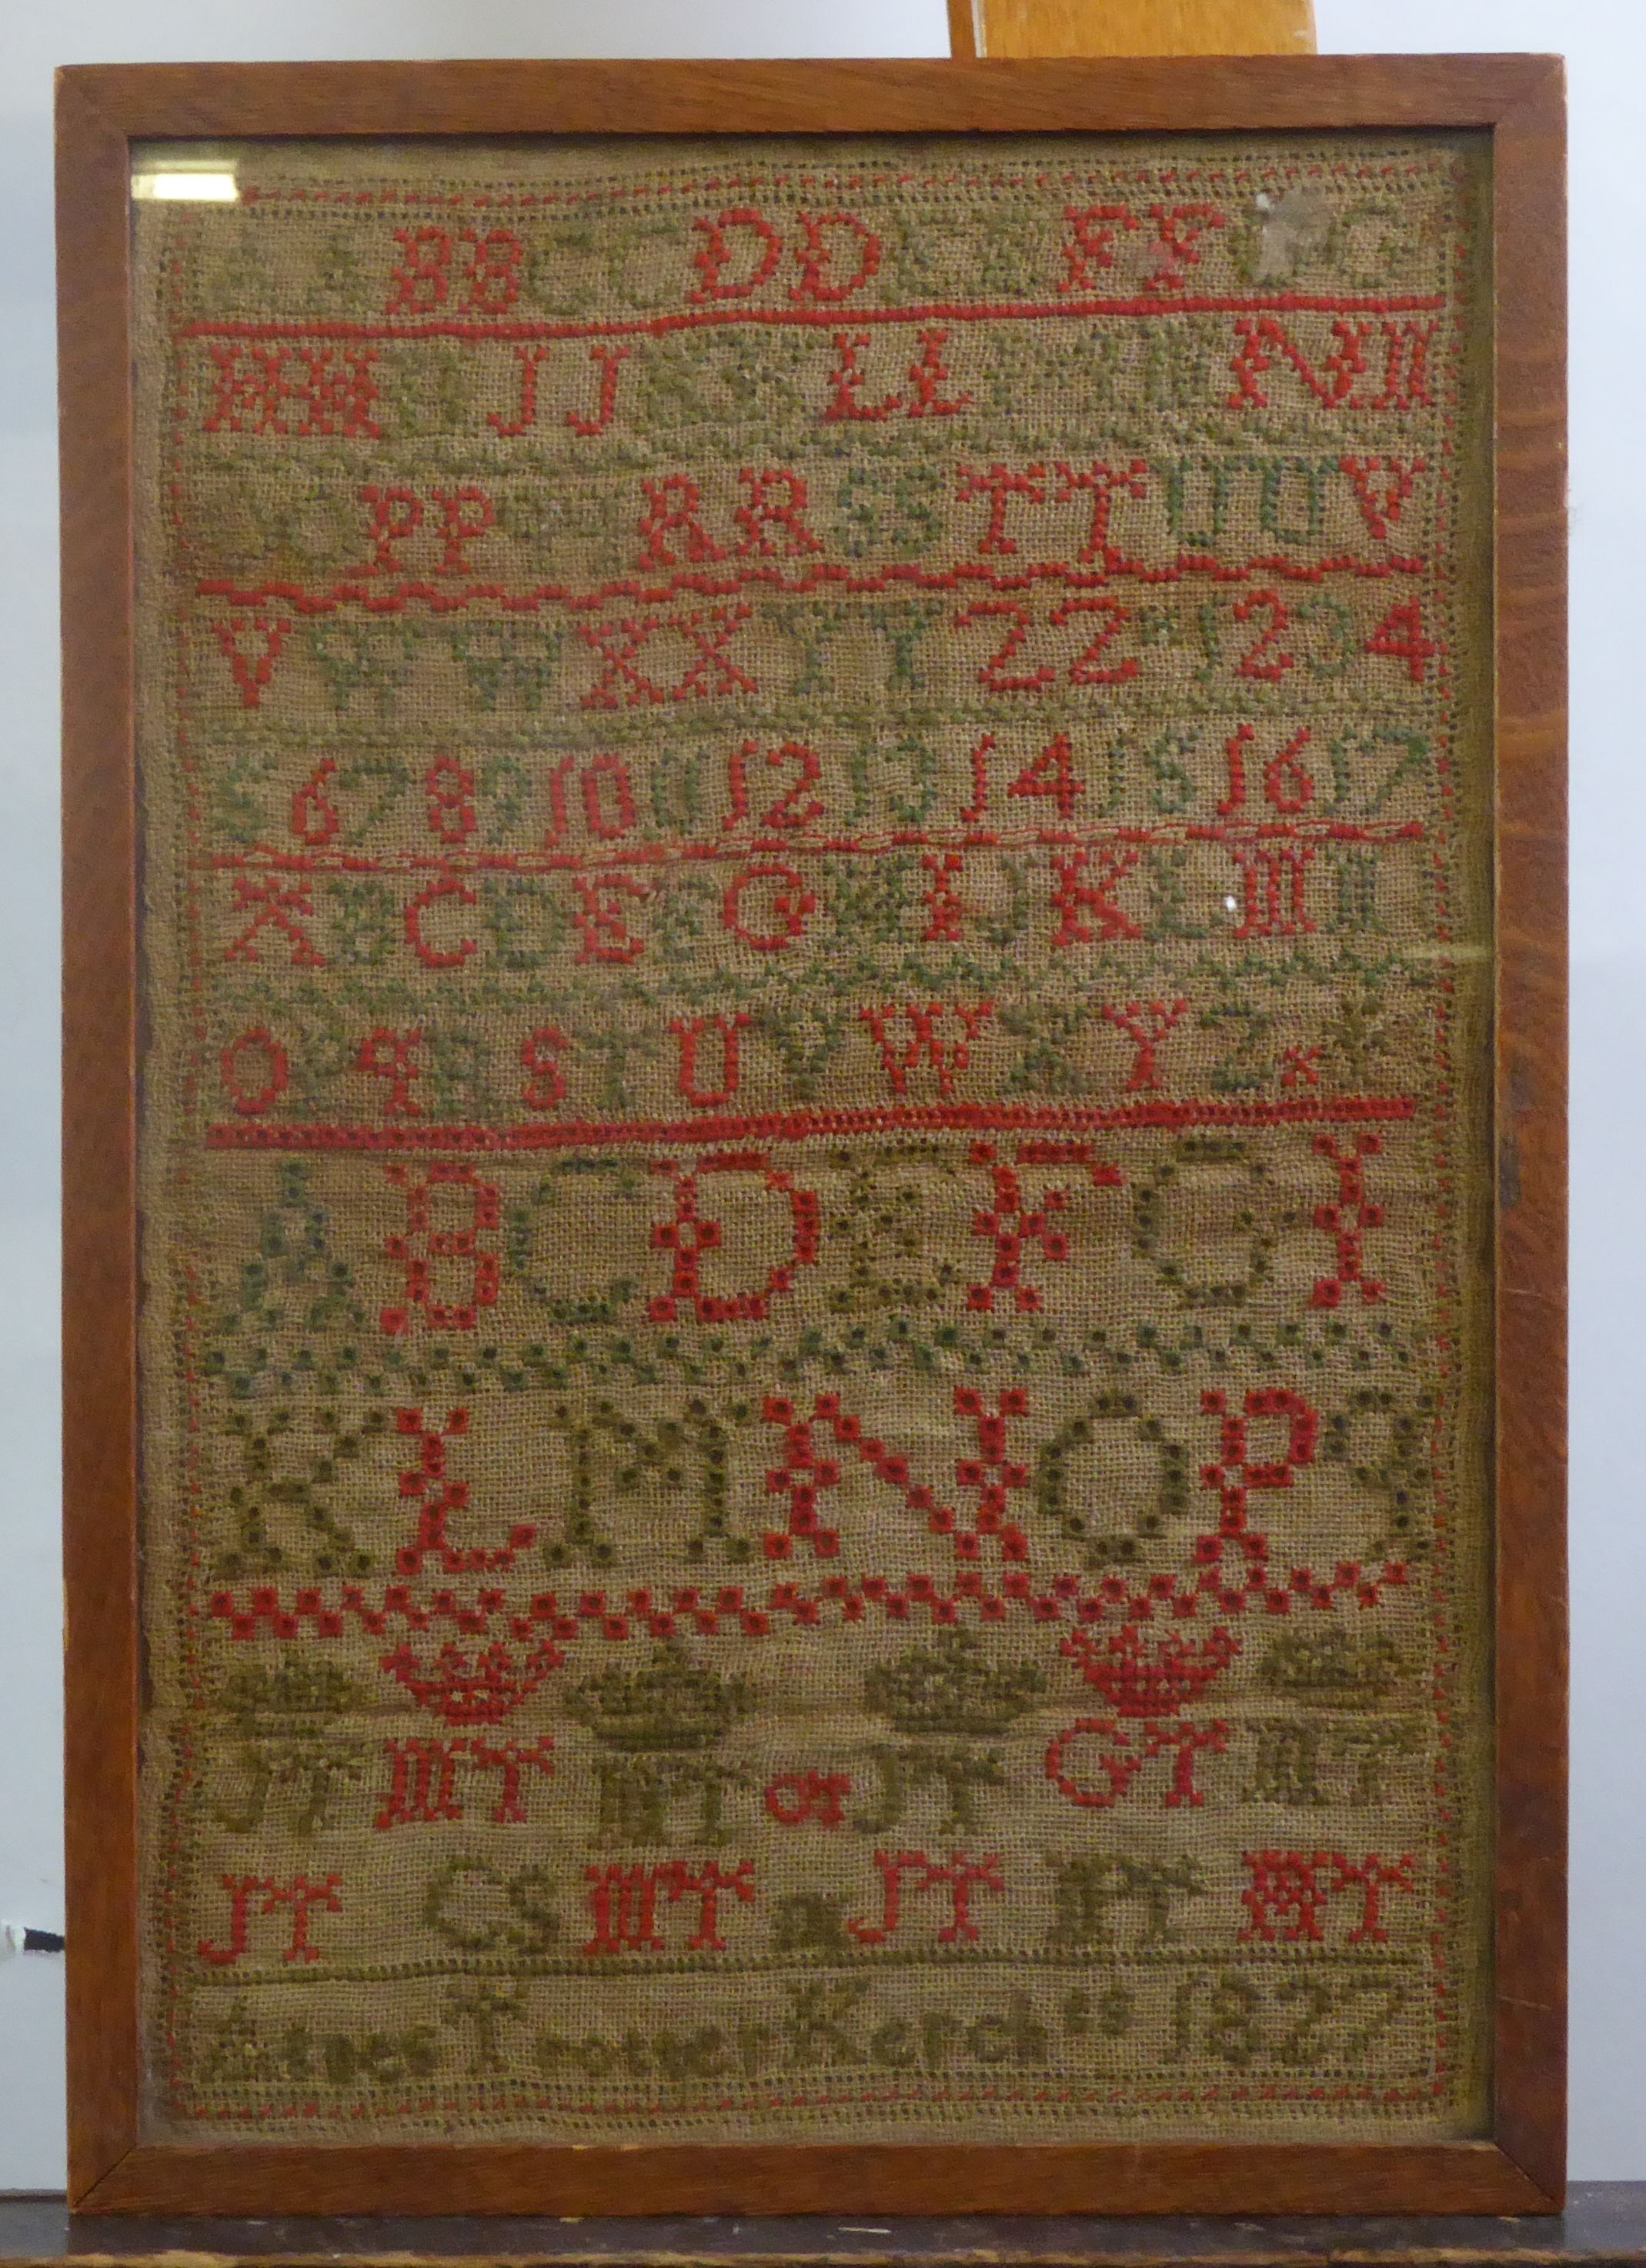 NINETEENTH CENTURY ALPHABET SAMPLER BY AGNES TROTTER KERCH, 1827 13 ¼” X 9” (33.7cm x 22.9cm) MODERN